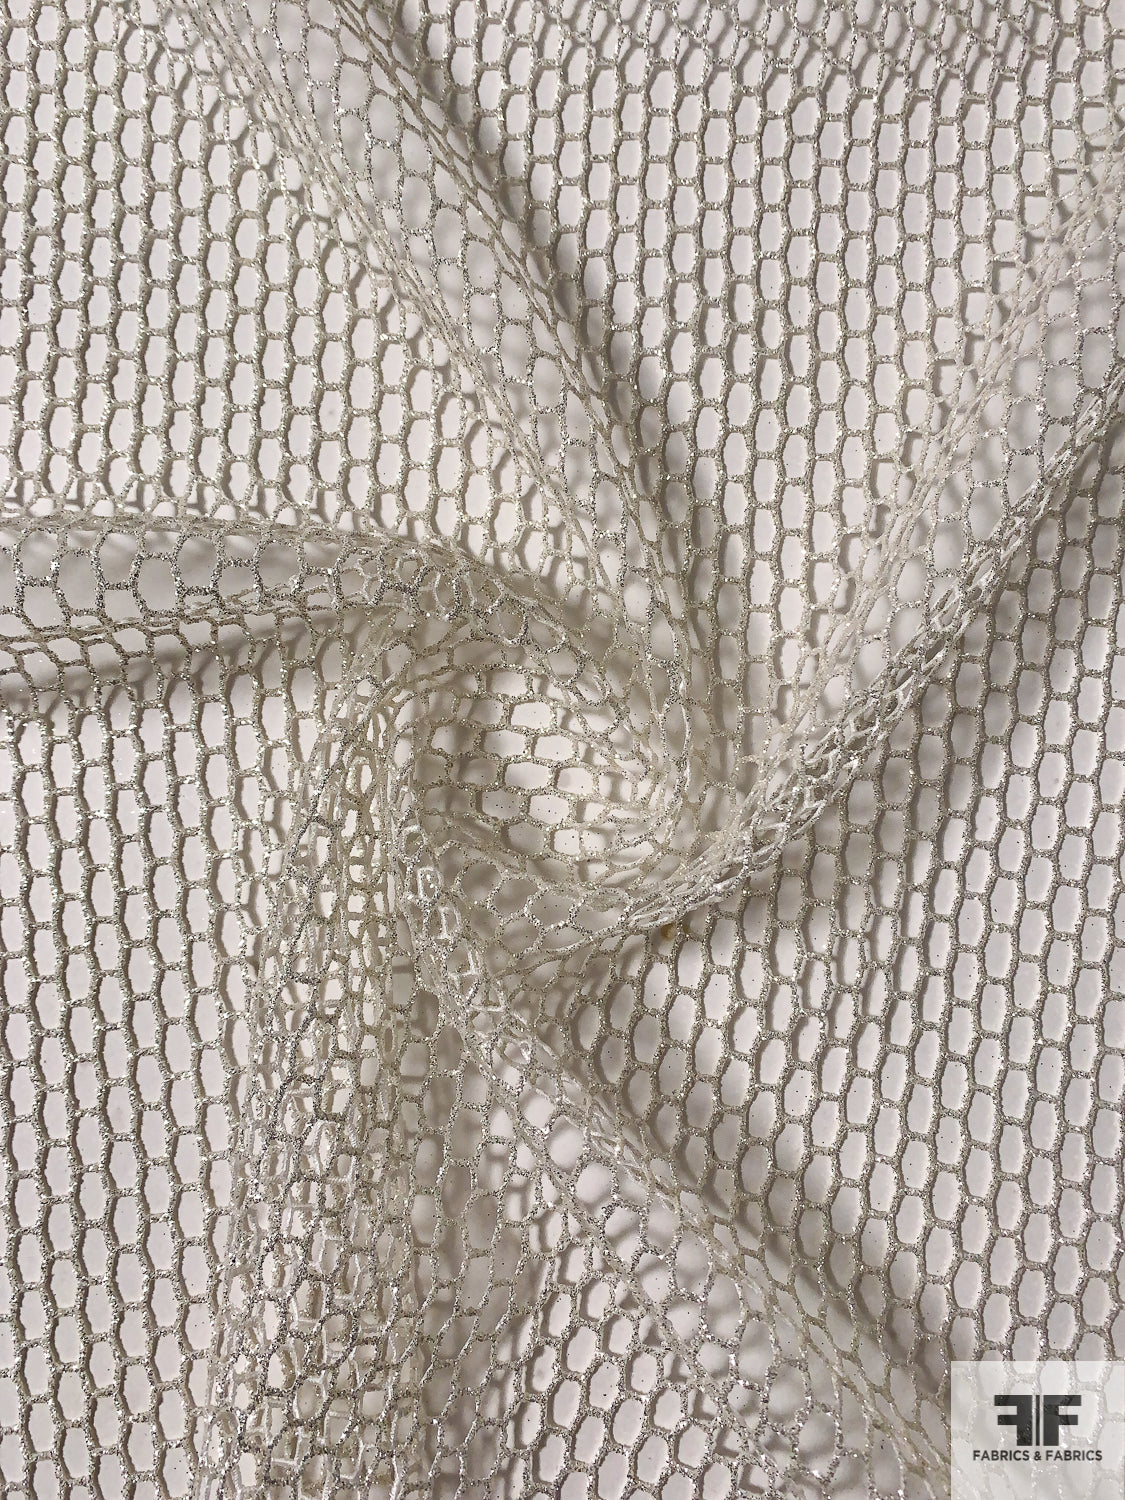 Cracked Ice Large Honeycomb Fishnet Lace - Off-White/Silver